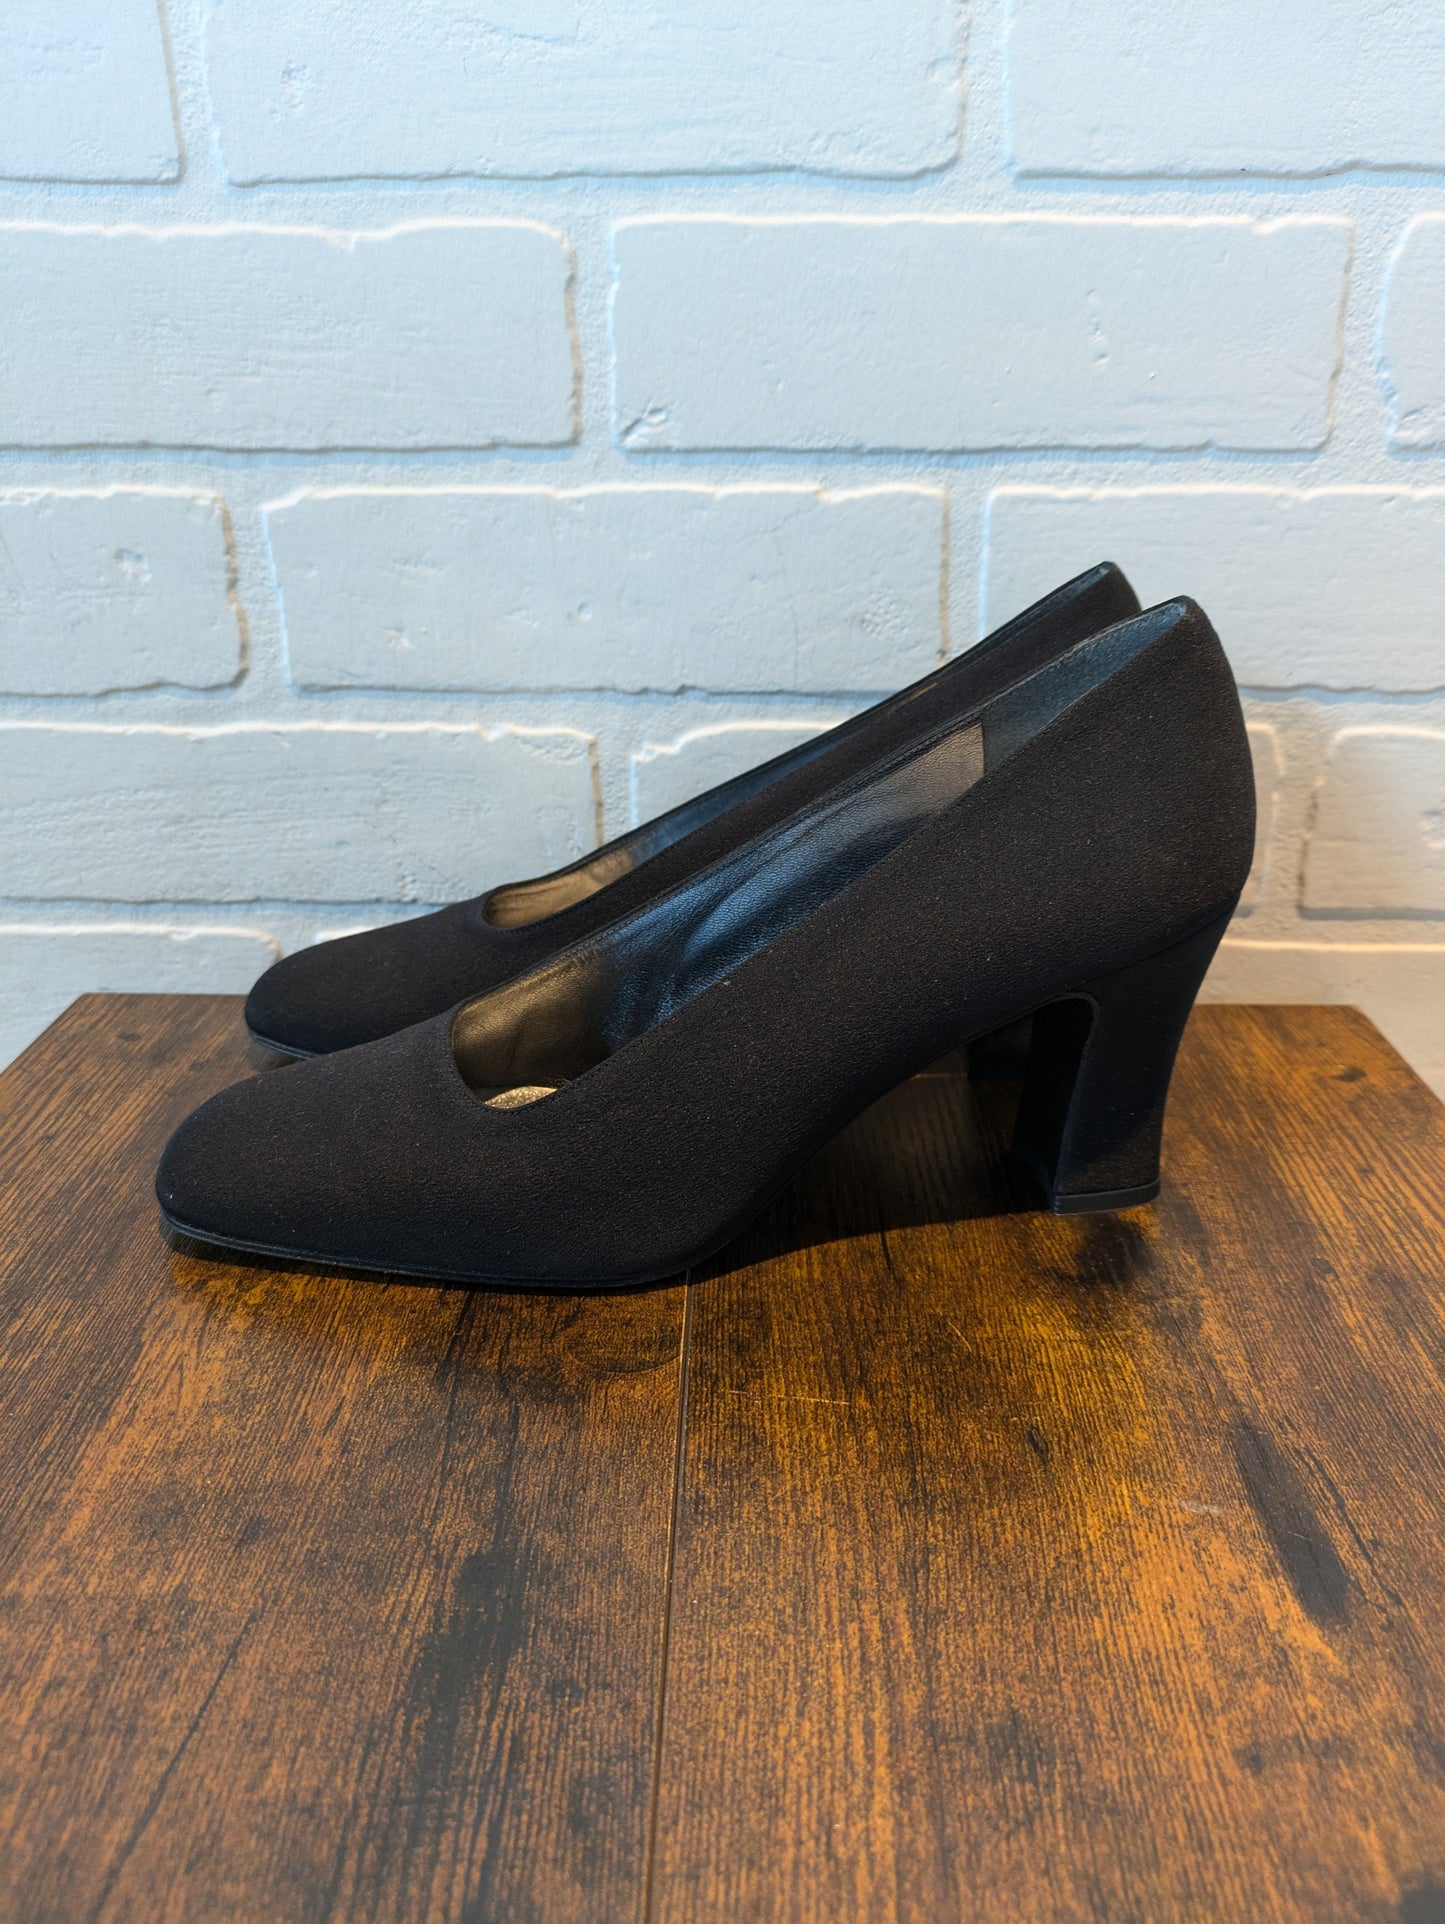 Black Shoes Heels Block Stuart Weitzman, Size 9.5